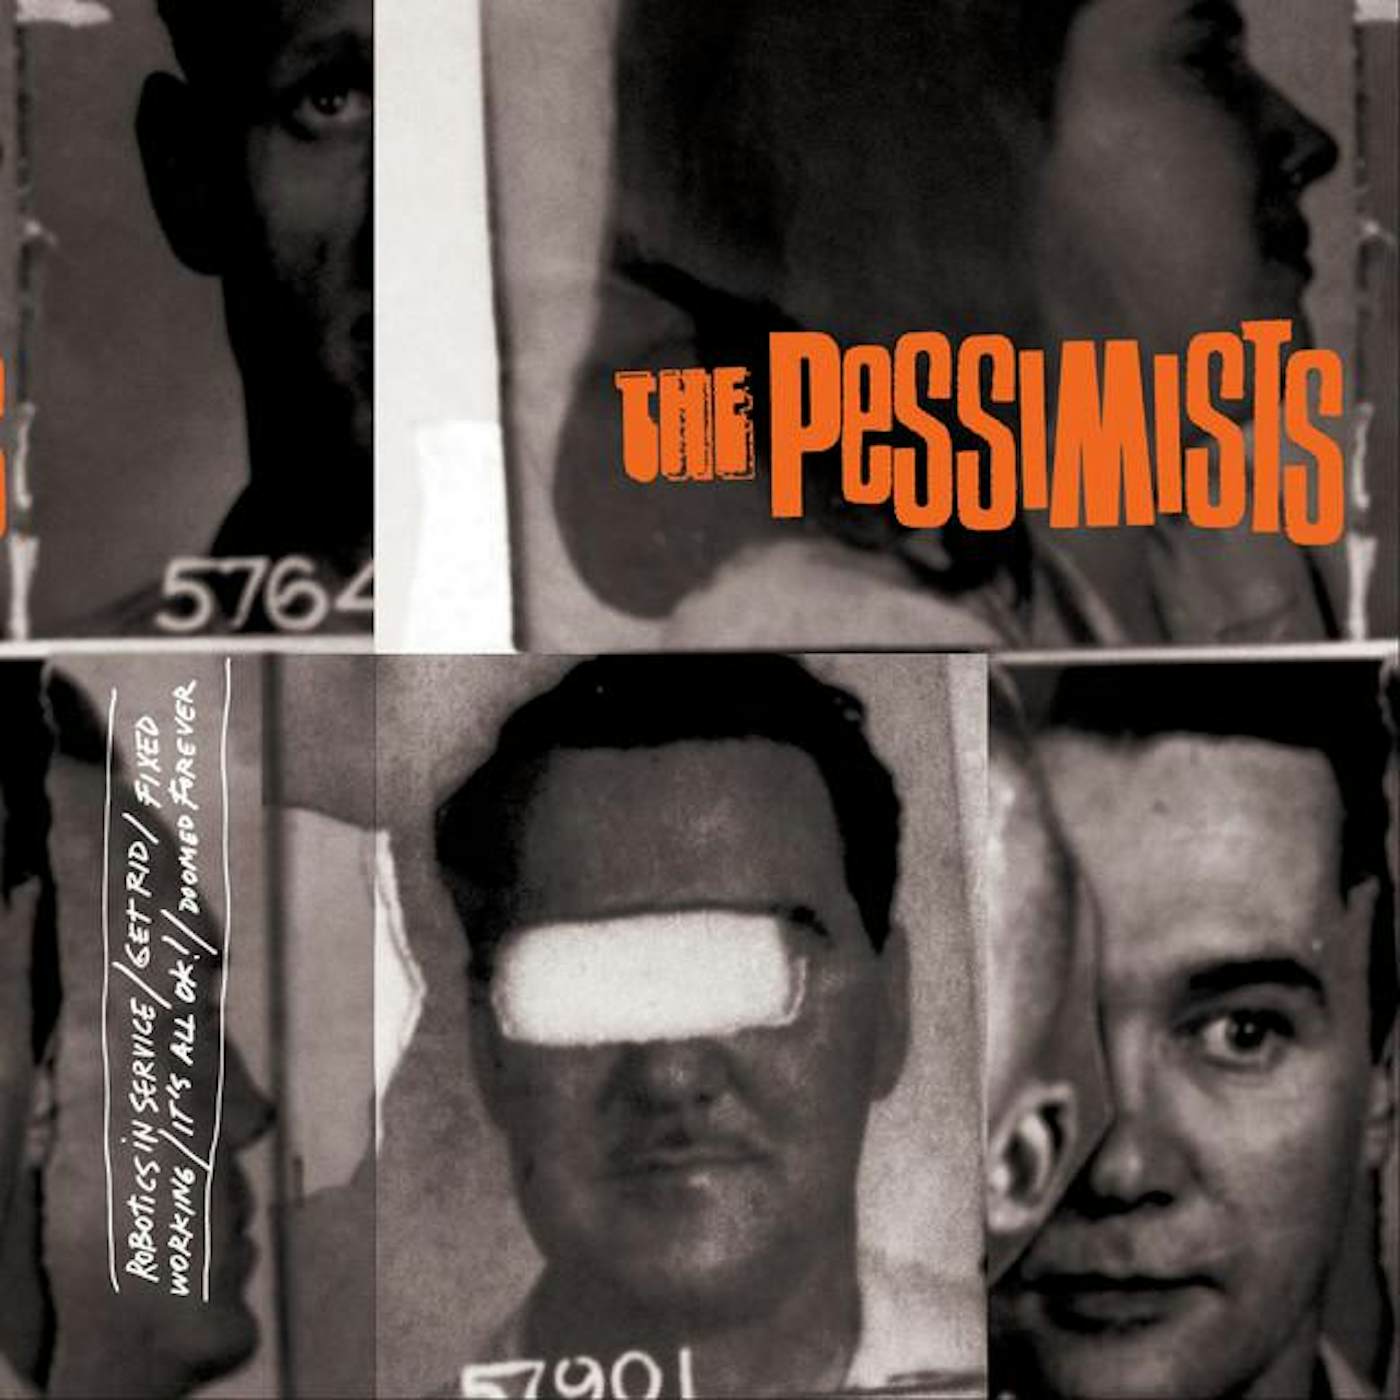 The Pessimists